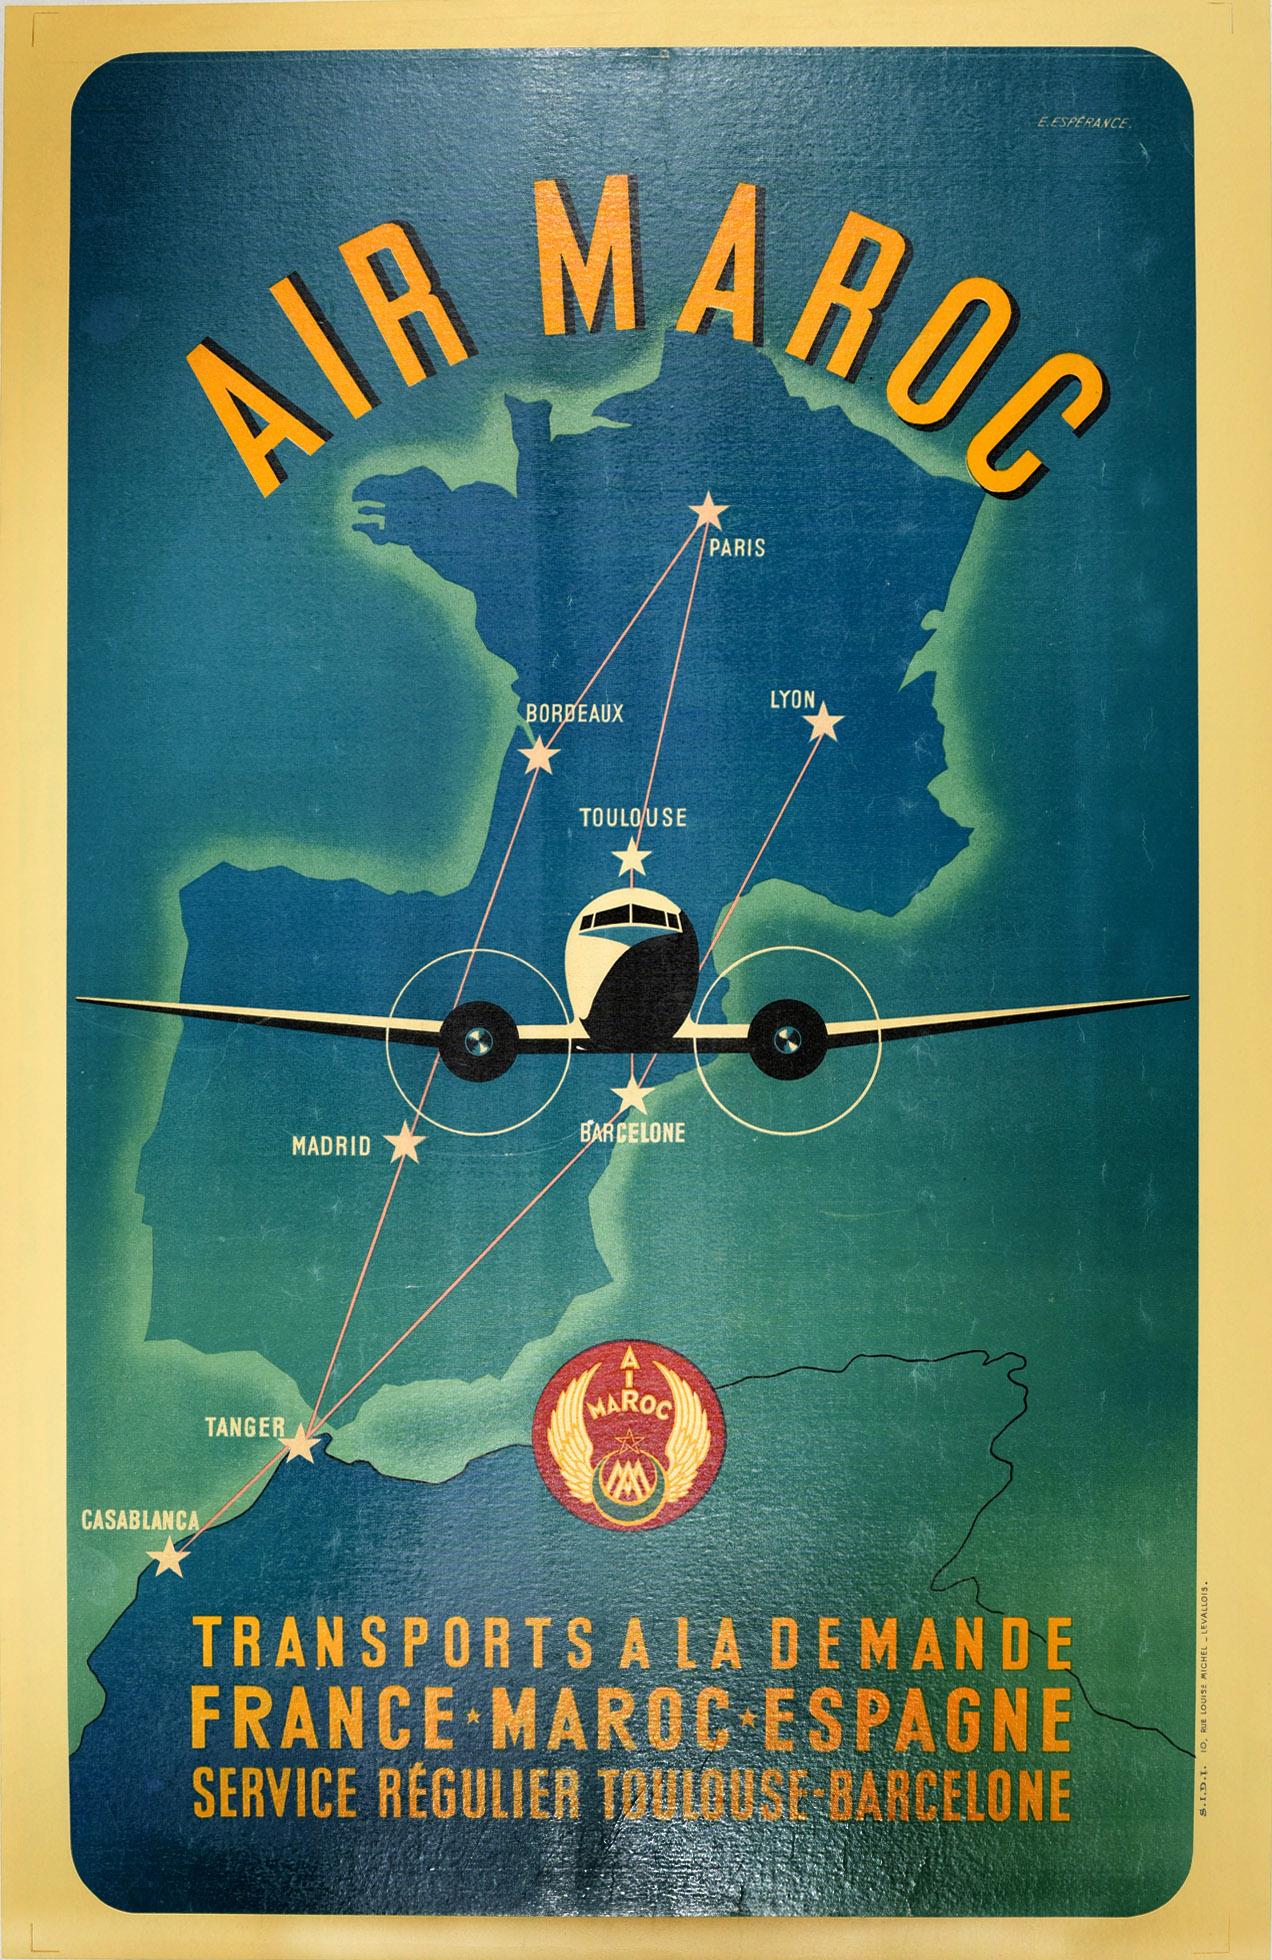 E. Esperance Print - Original Vintage Air Maroc Travel Poster Route Map France Morocco Spain Services